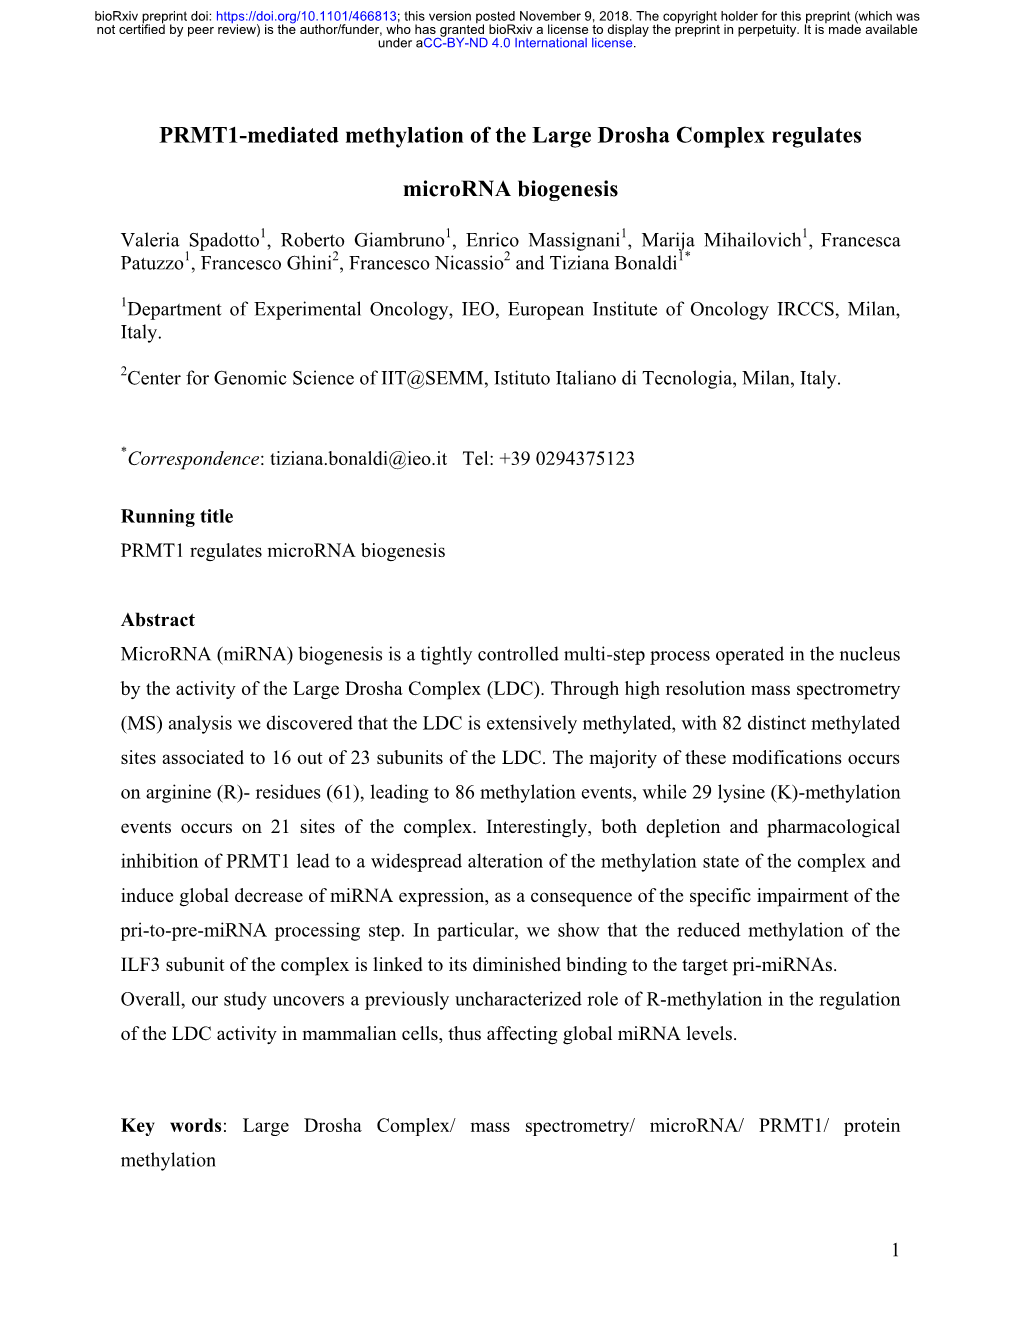 PRMT1-Mediated Methylation of the Large Drosha Complex Regulates